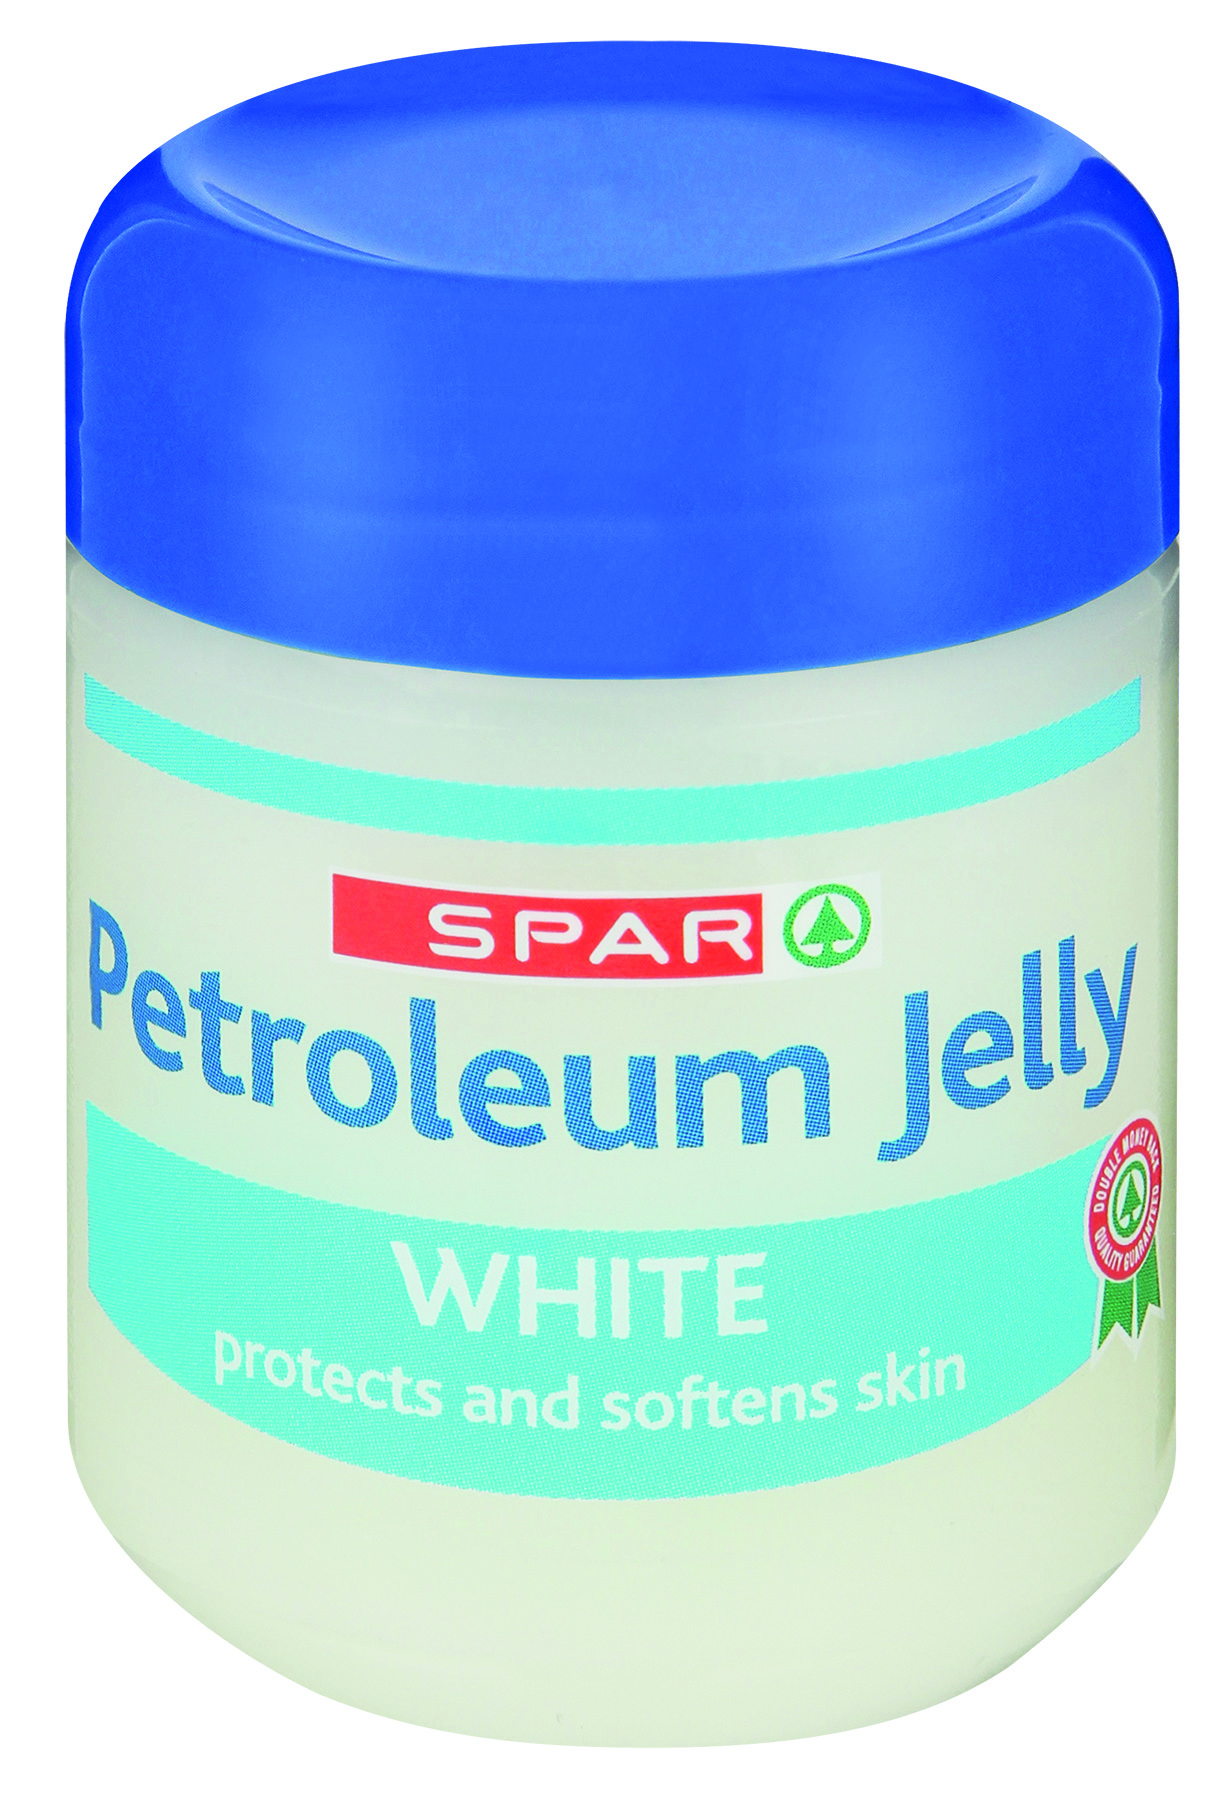 petroleum jelly white 